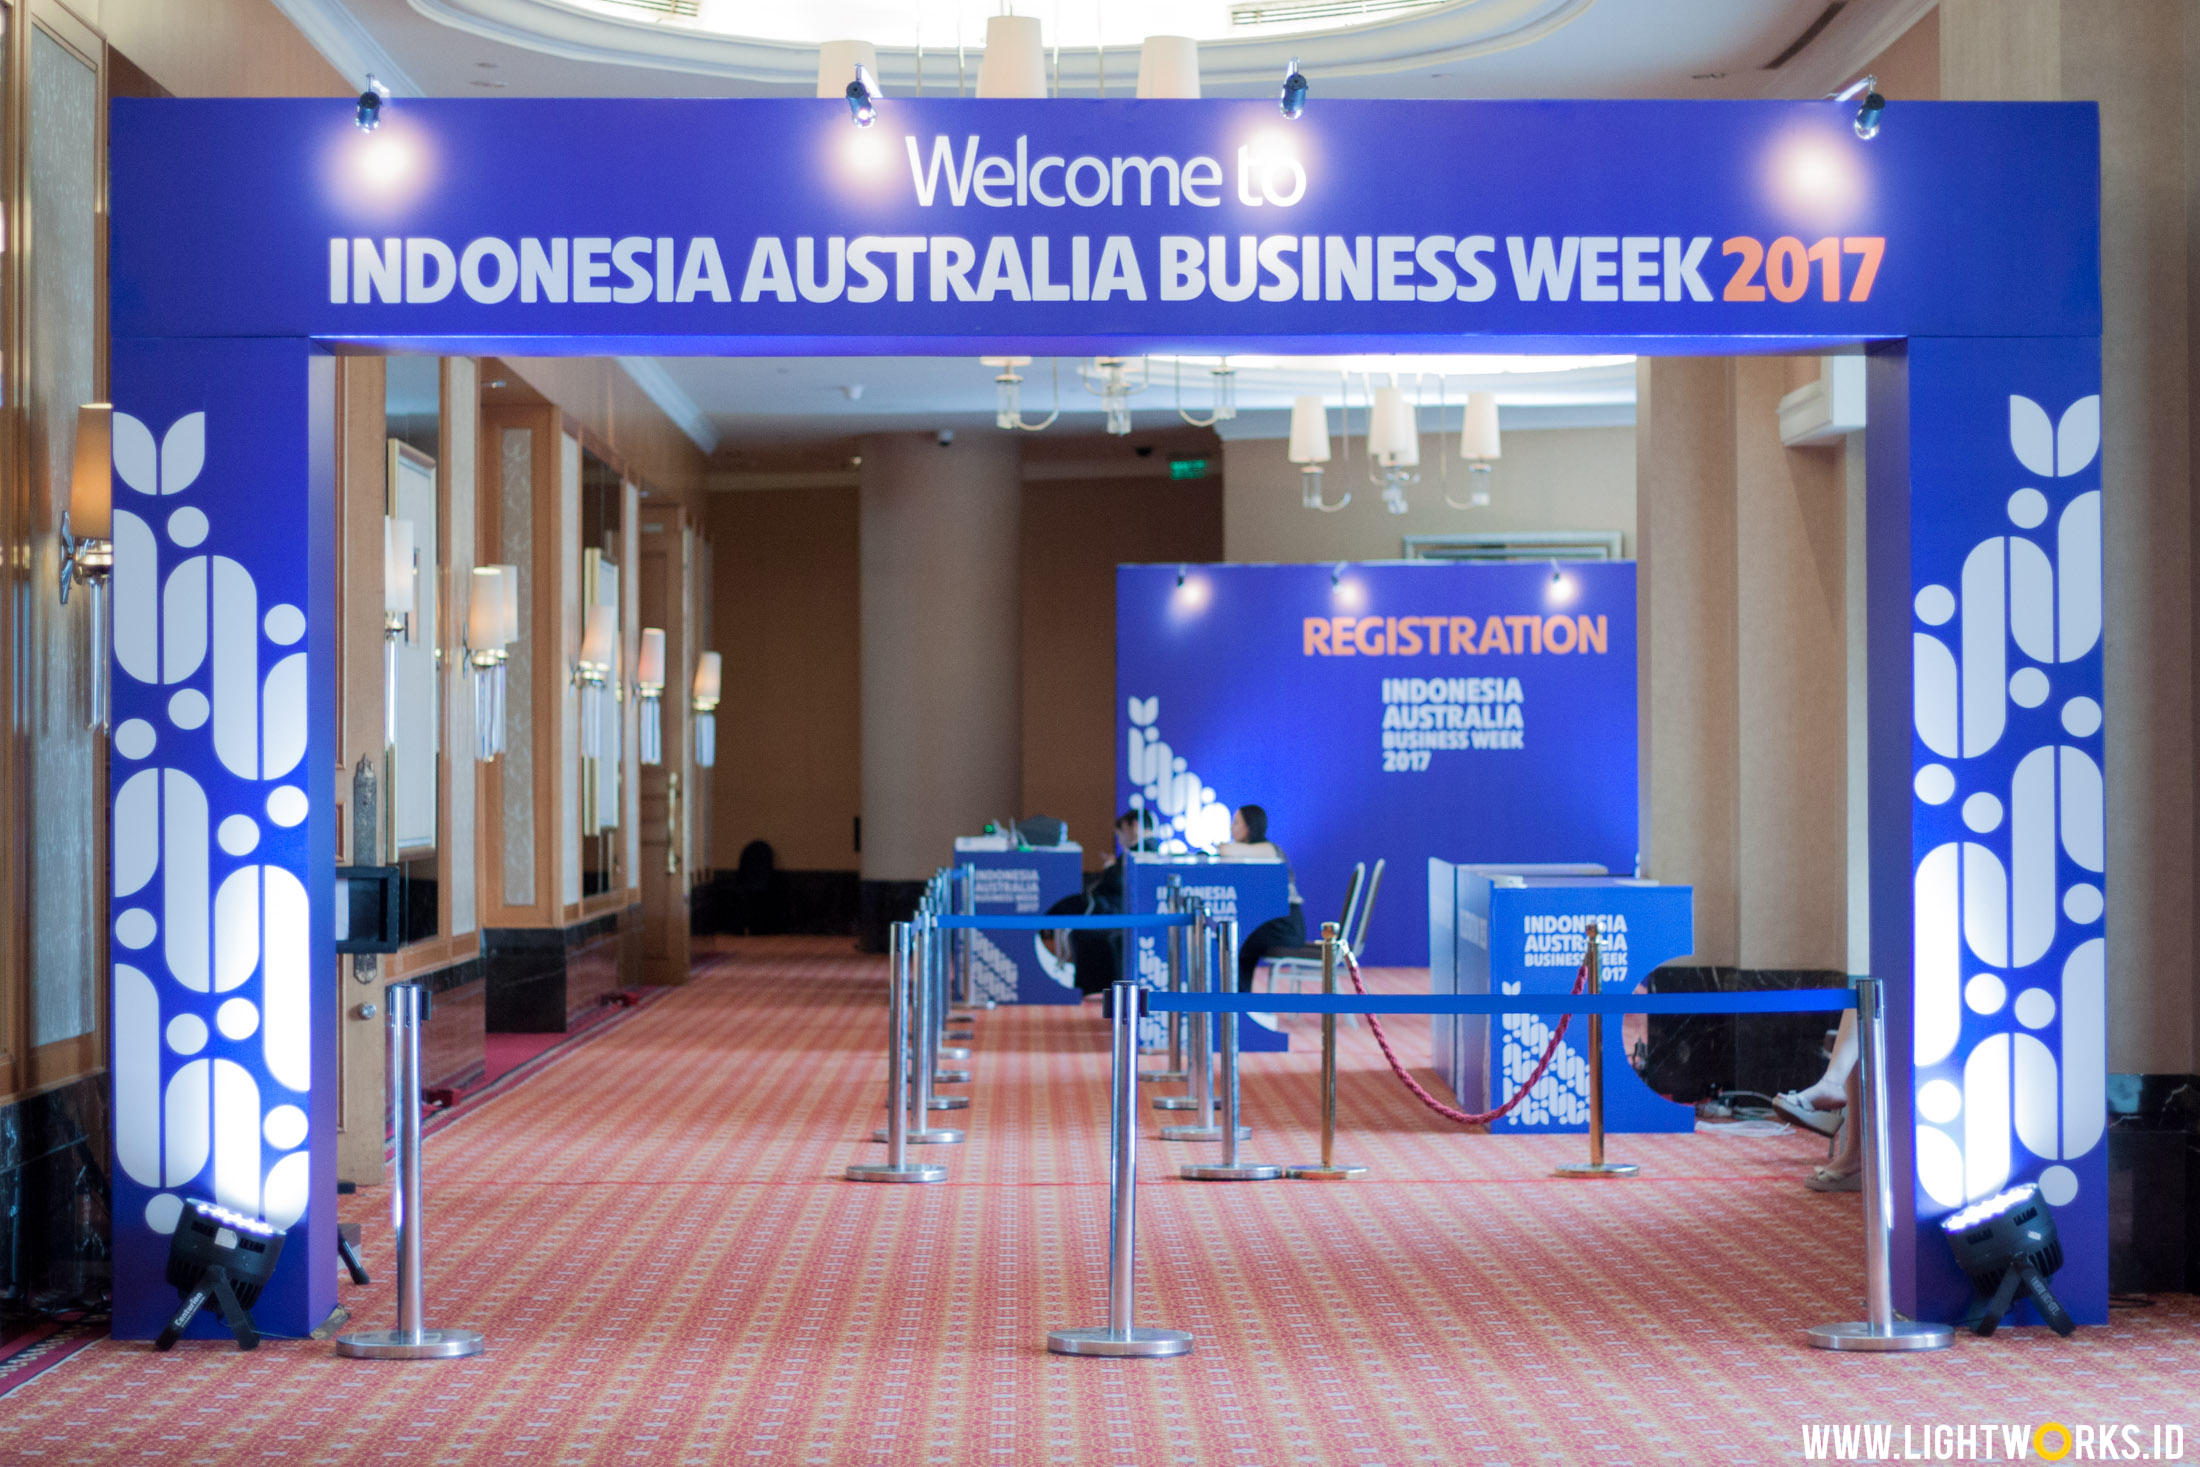 Indonesia Australia Business Week 2017 | Venue at The Ritz-Carlton Mega Kuningan | Sound system by Soundworks Jakarta | Lighting by Lightworks